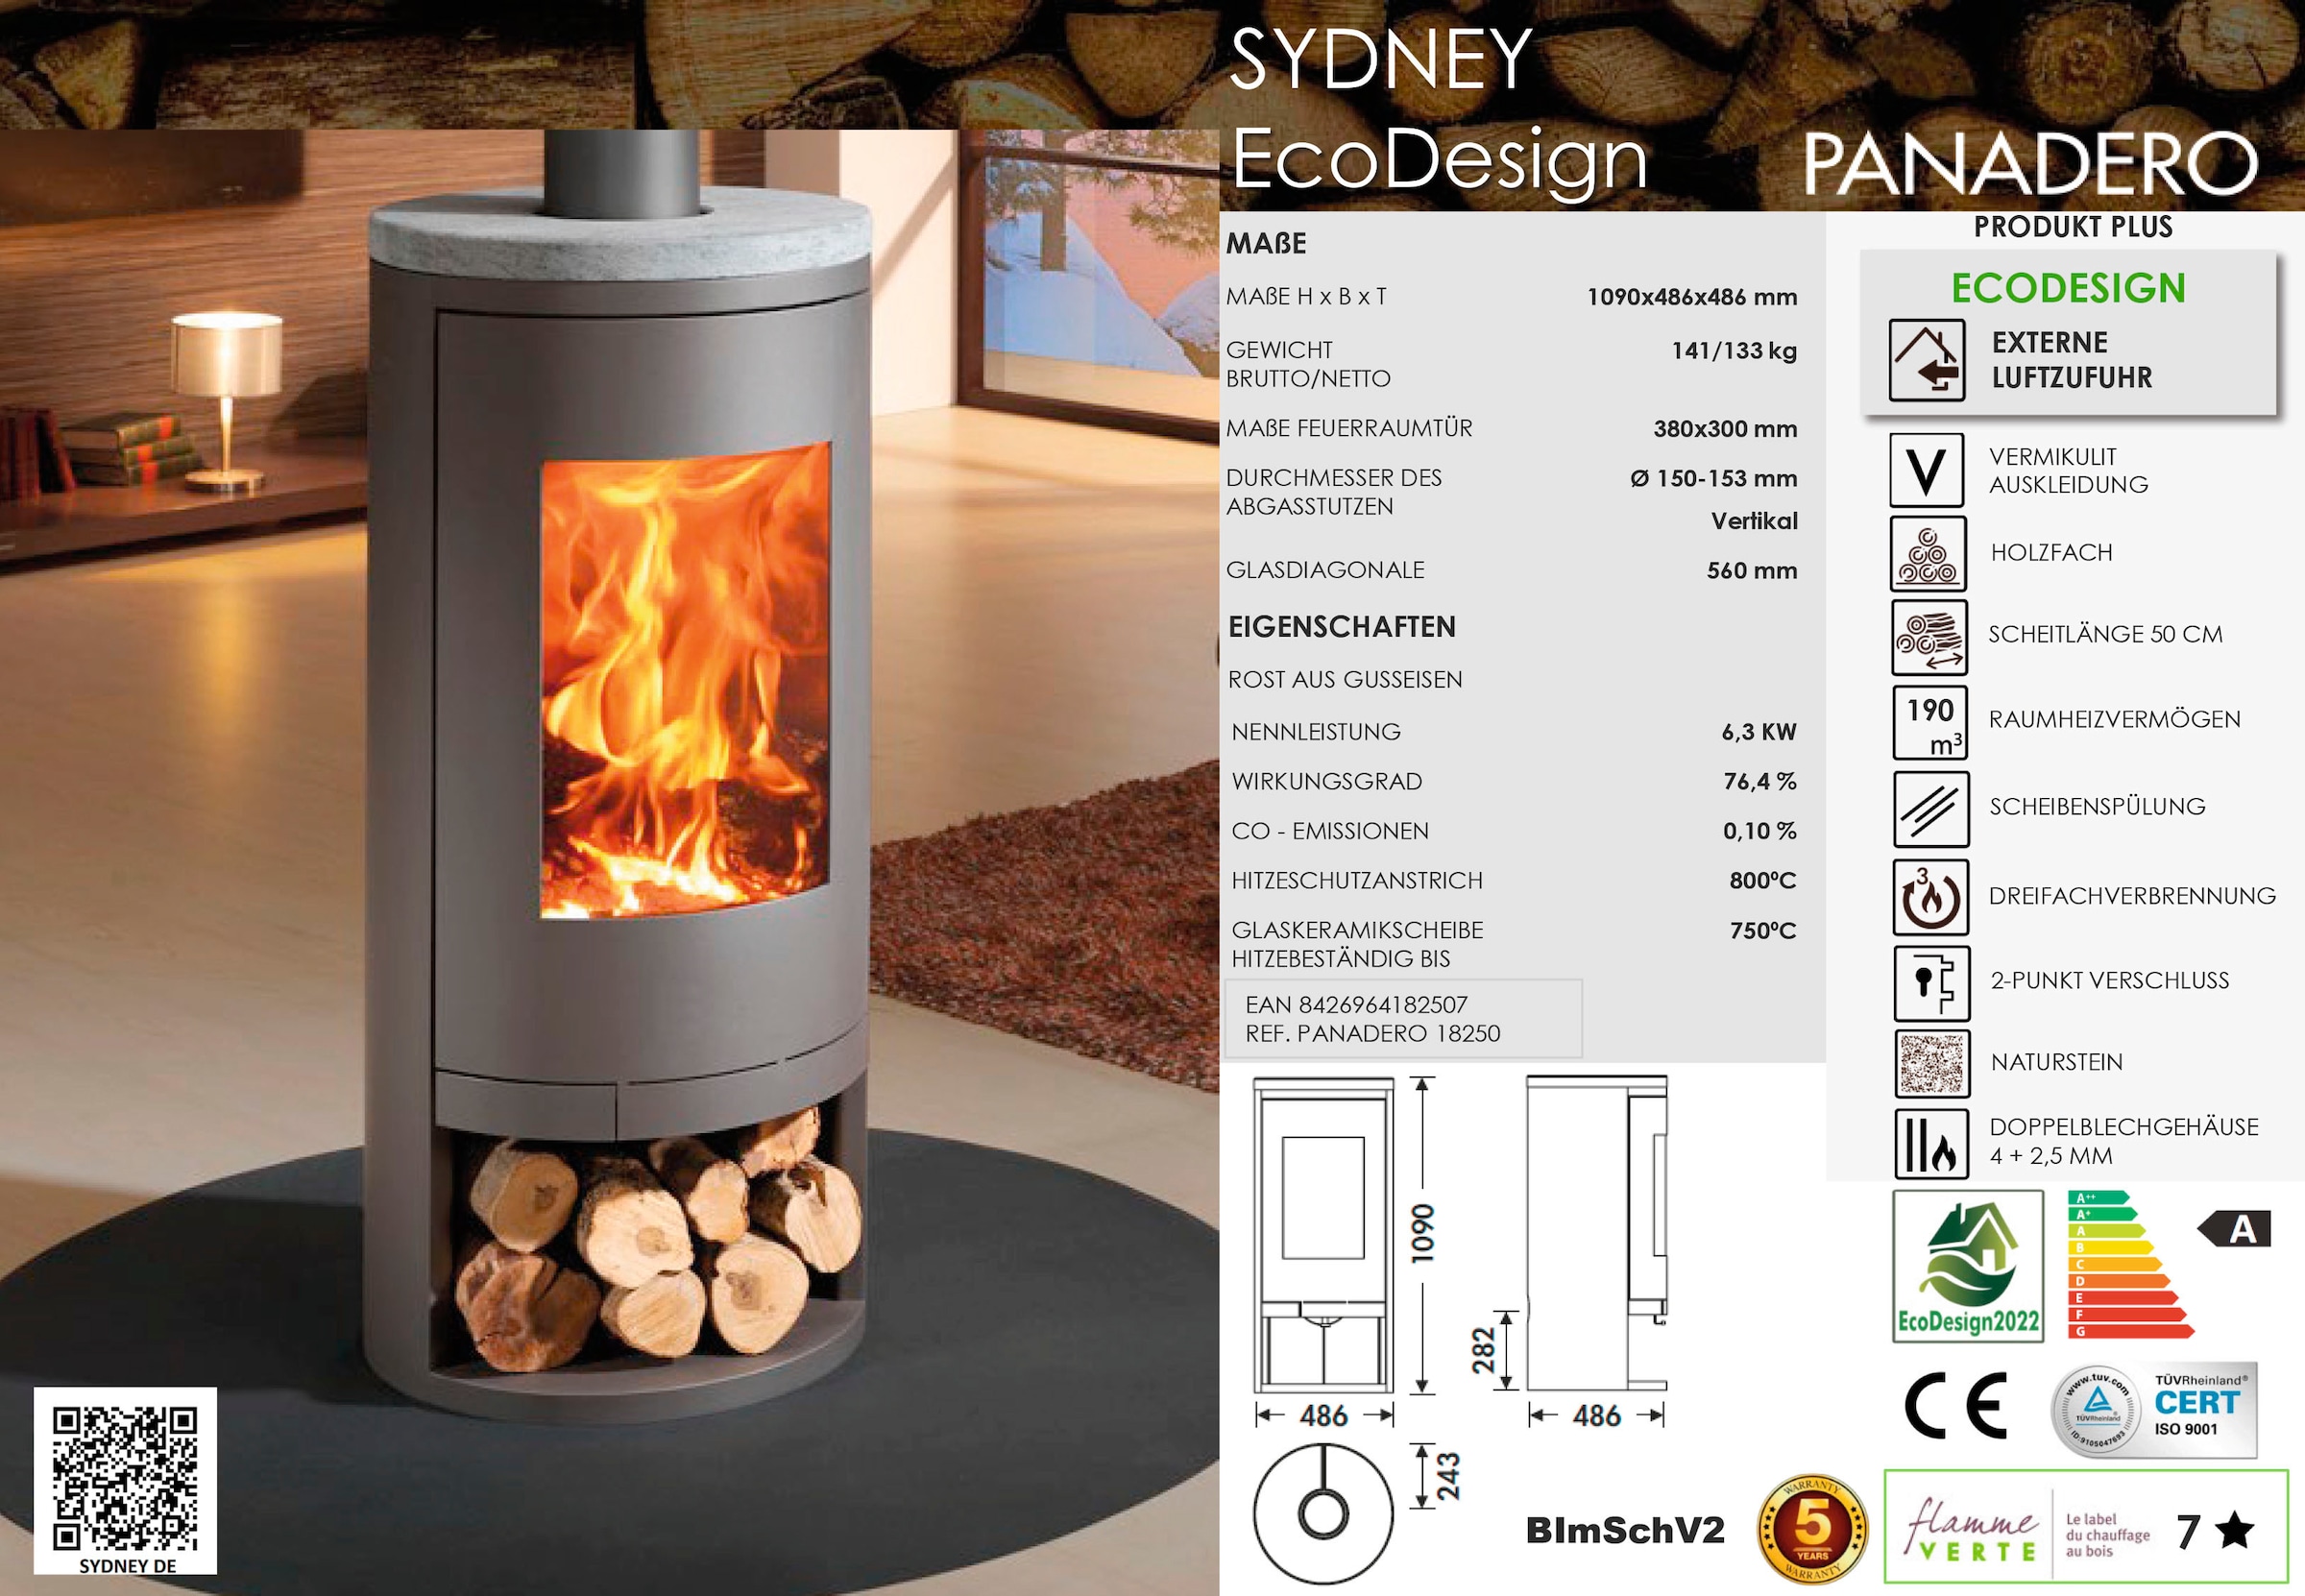 (1 Panadero tlg.) Ecodesign«, BAUR Kaminofen »Kaminofen | Sydney kaufen